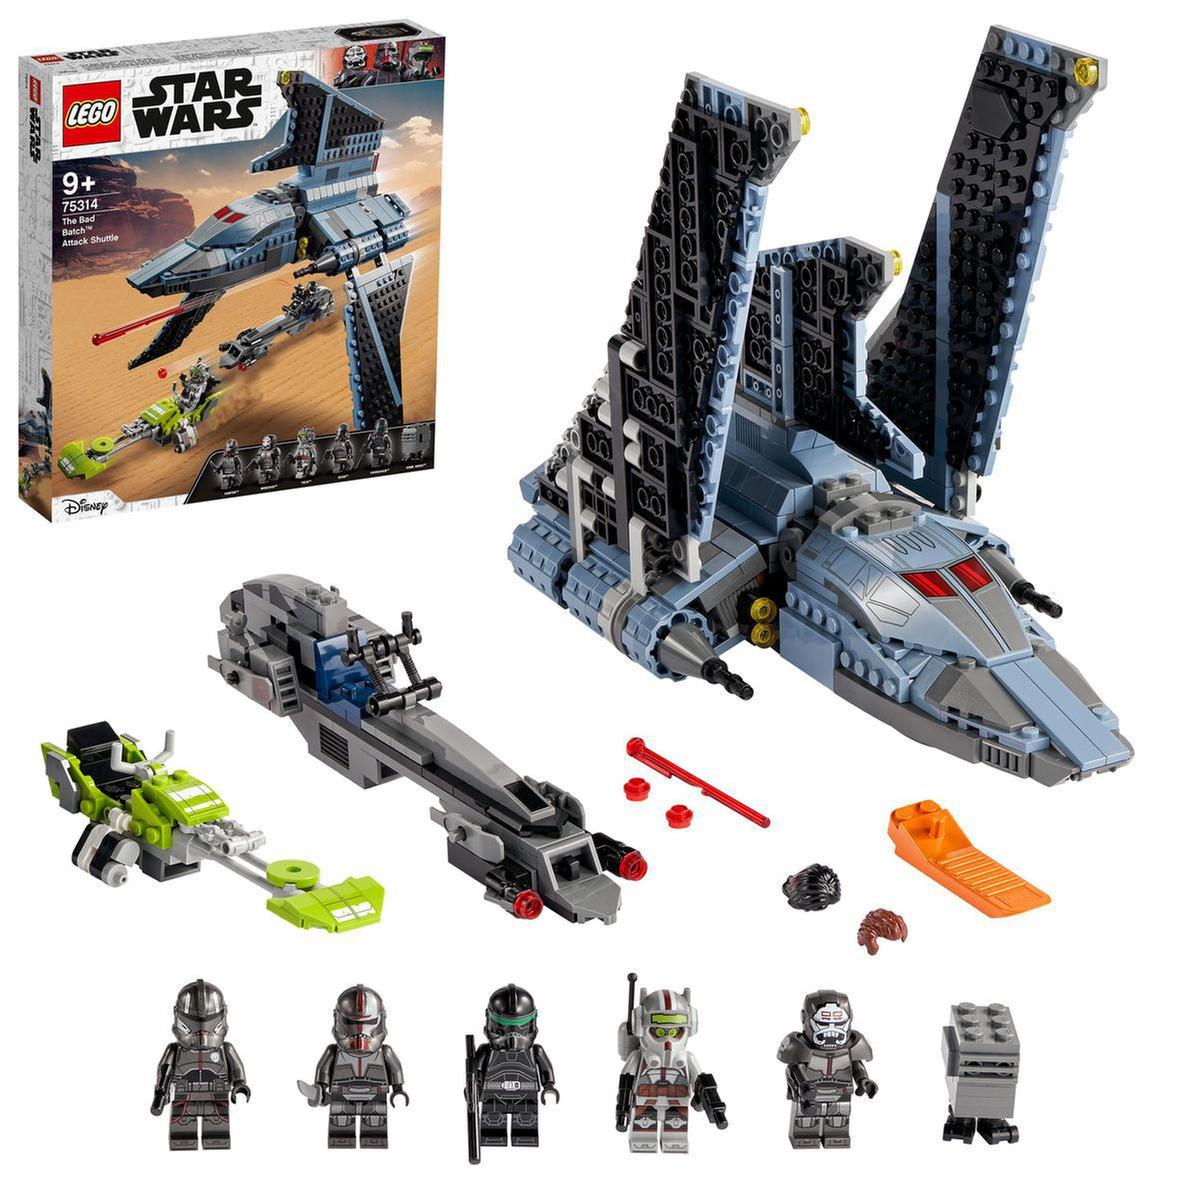 LEGO Star Wars - Vaivém de ataque The Bad Batch - 75314 | LEGO | Loja de  brinquedos e videojogos Online Toysrus